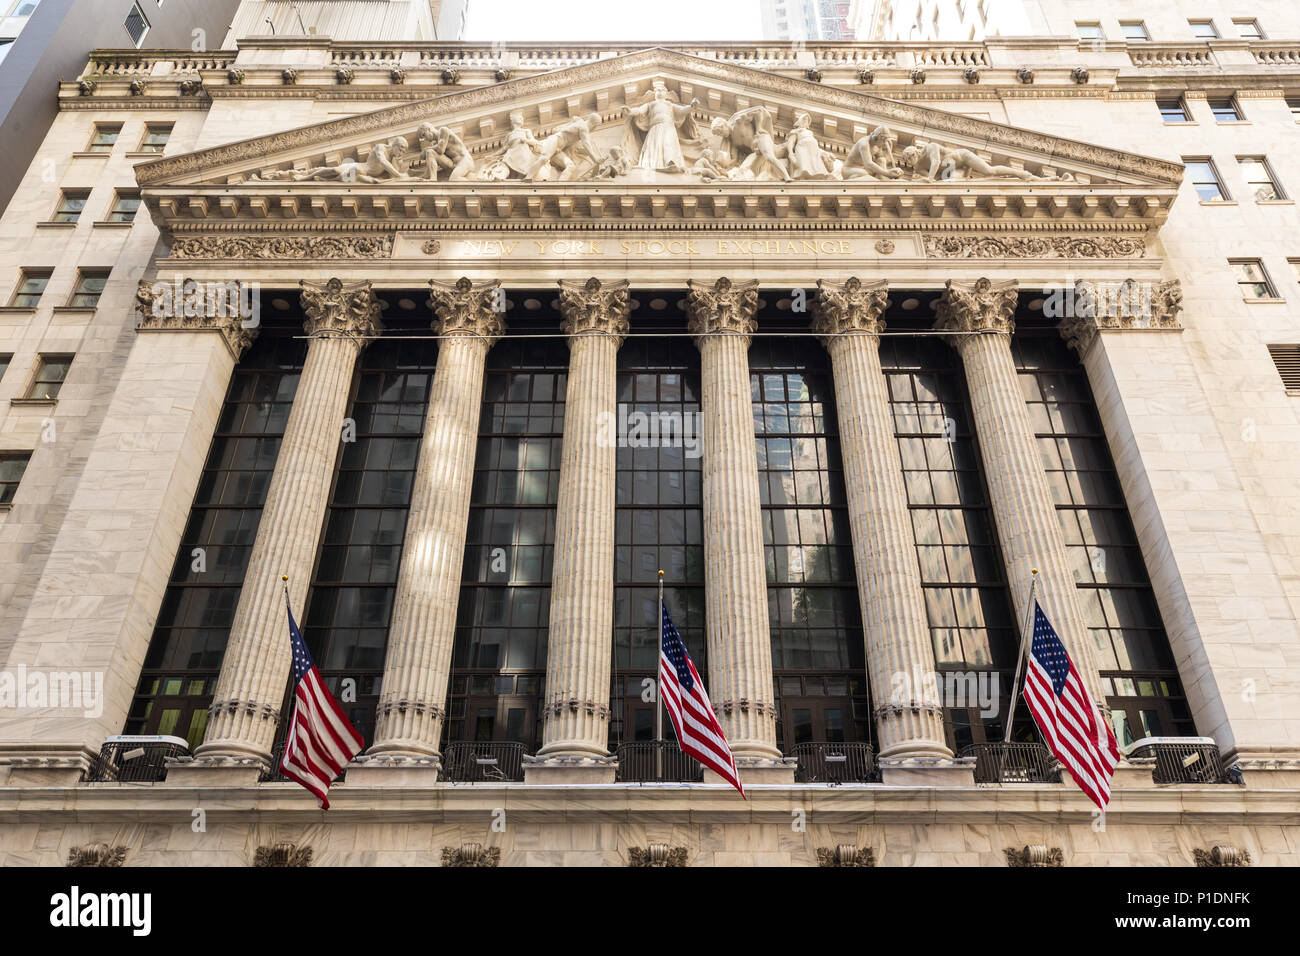 Exterior of New york Stock Exchange, Wall street, lower Manhattan, New York City, USA. Stock Photo